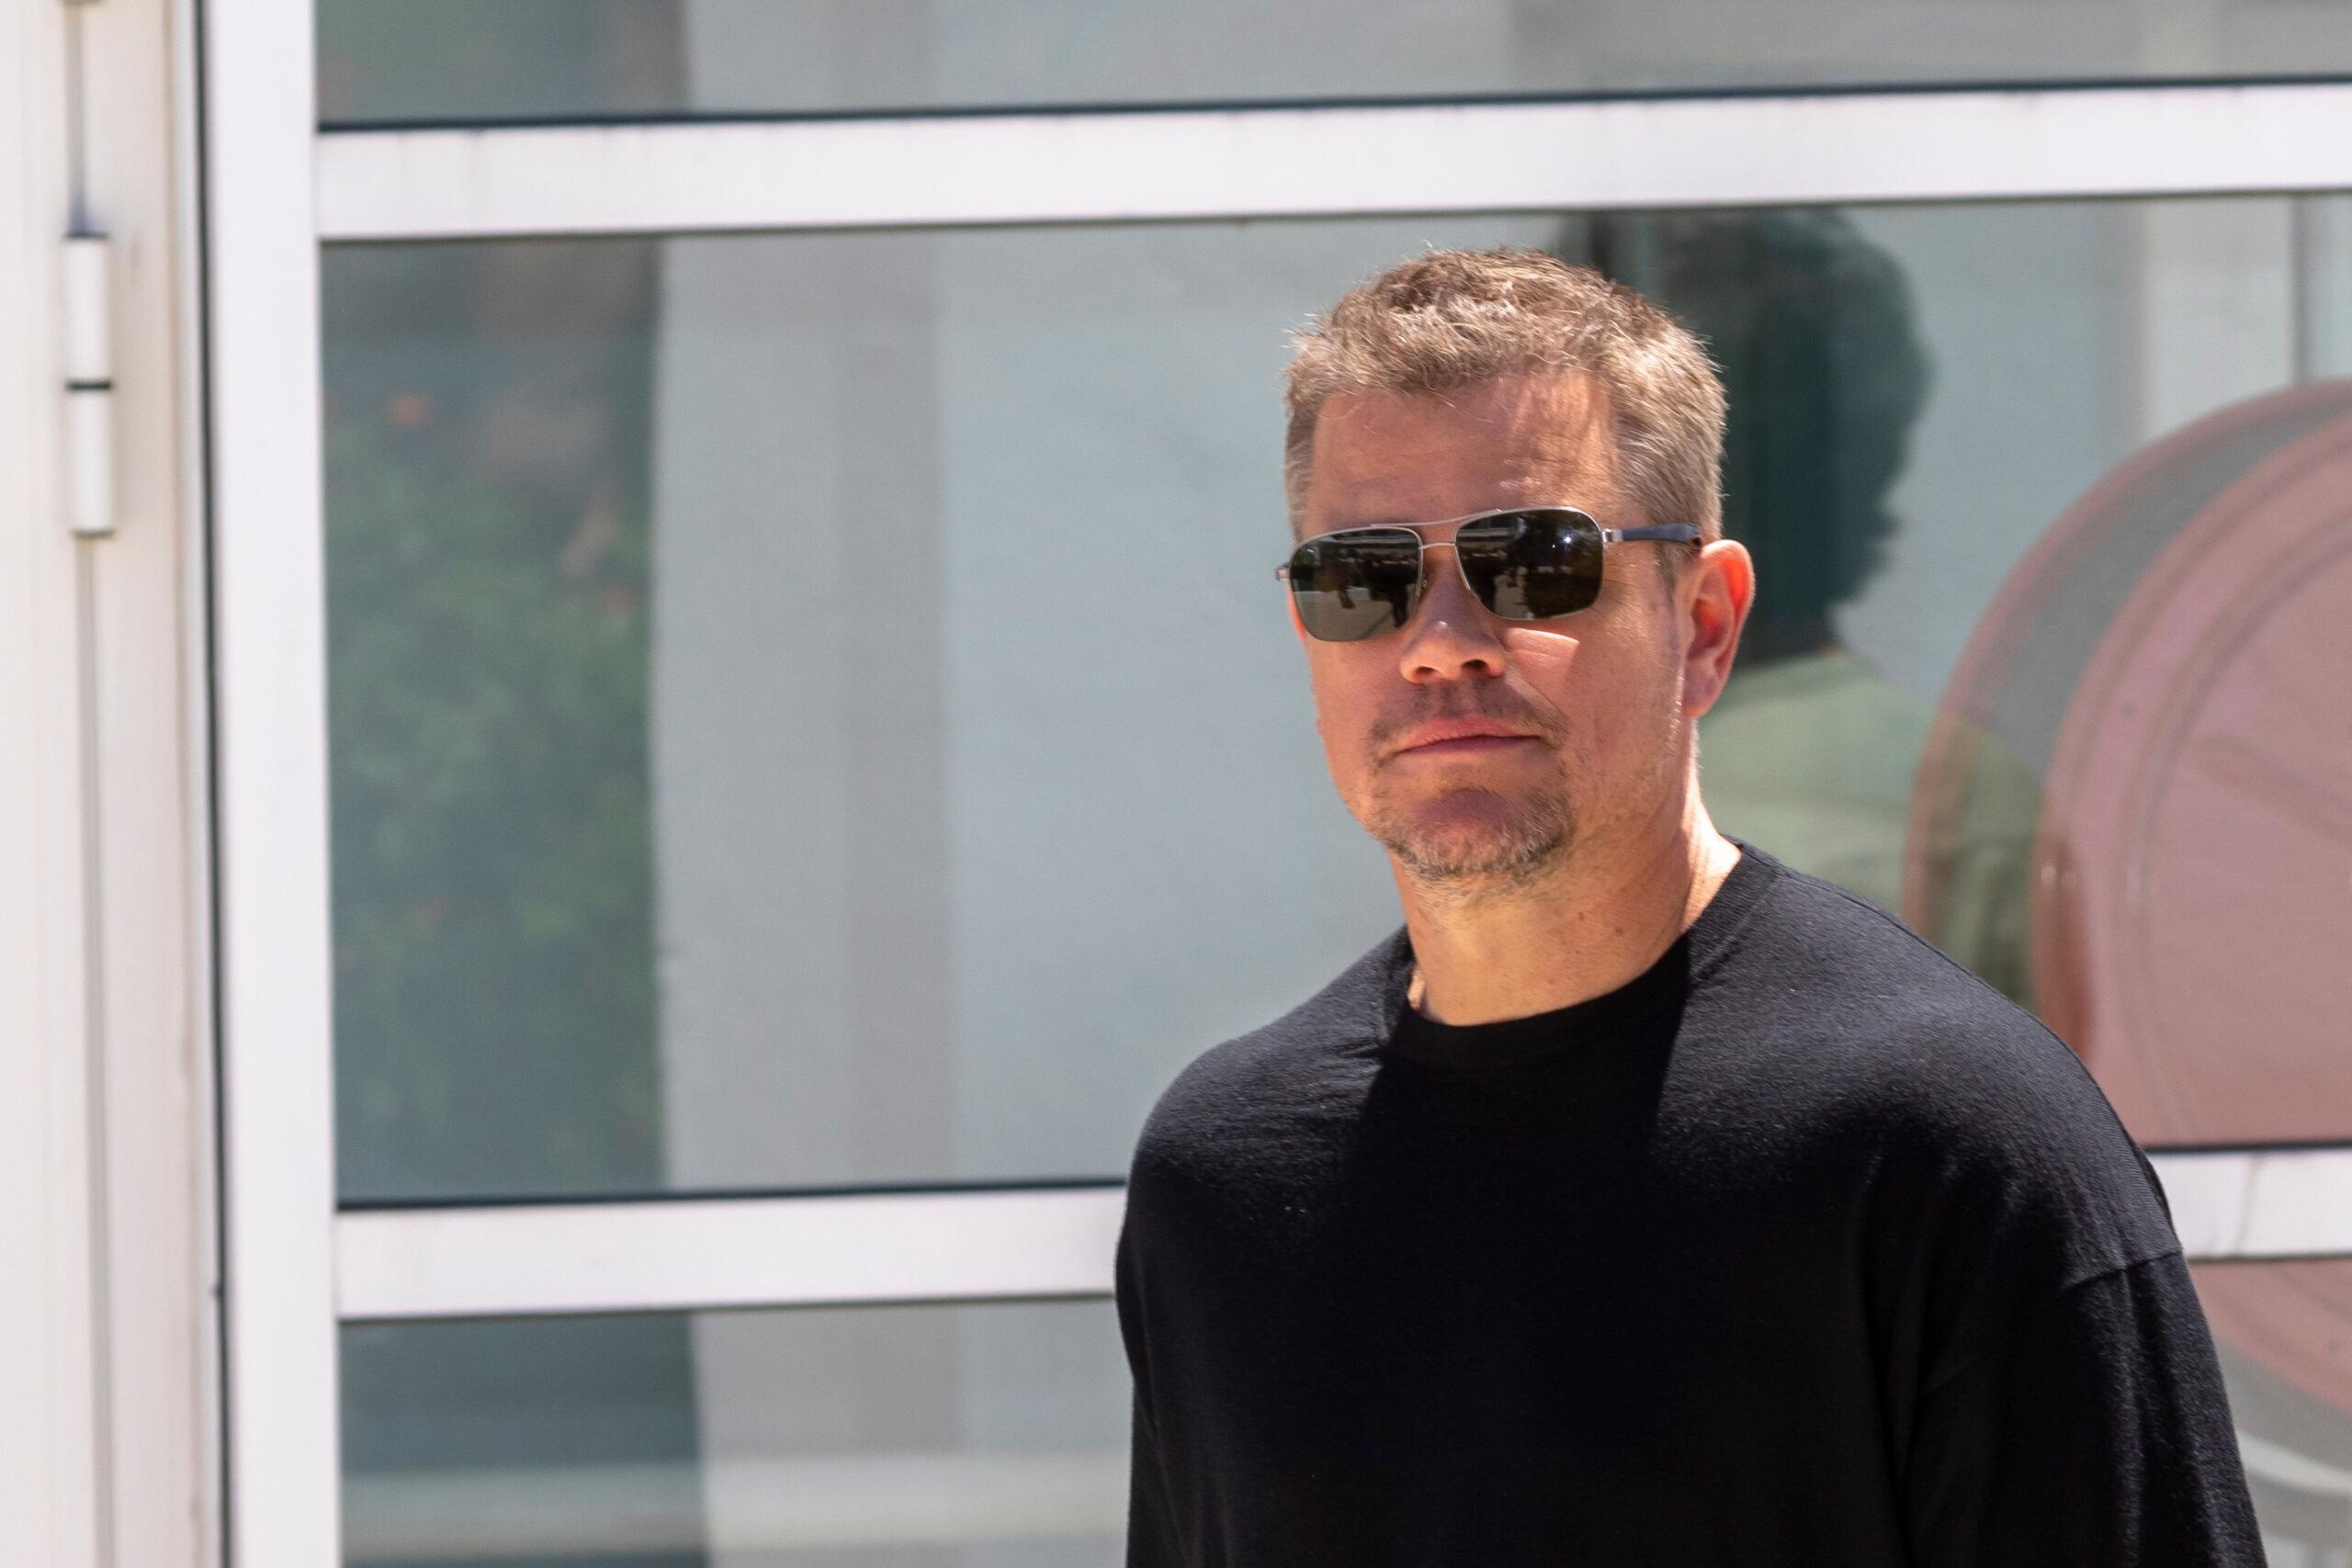 Matt Damon wearing sunglasses and a black shirt